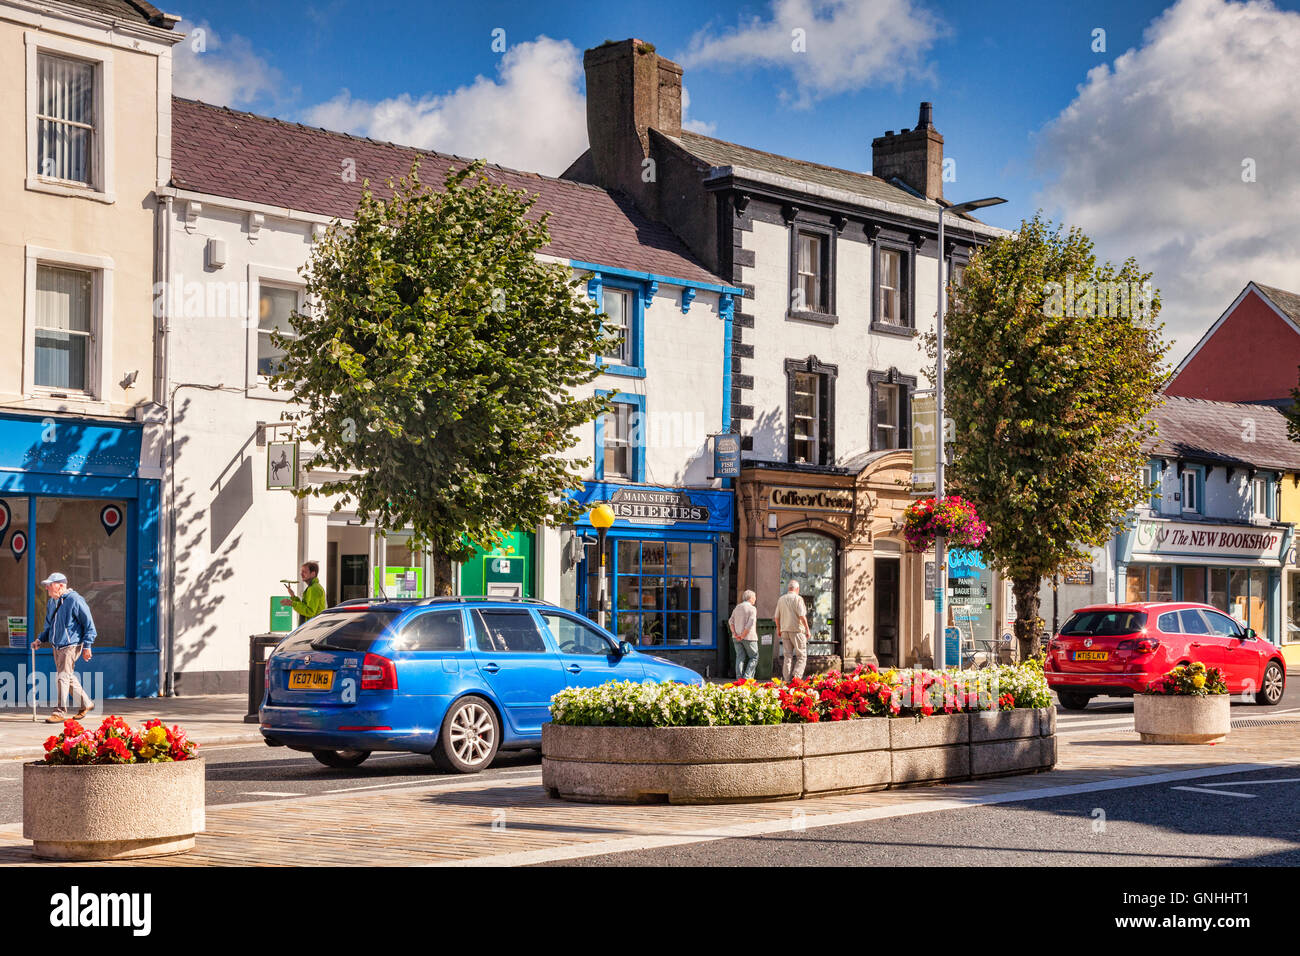 Main Street, Cockermouth, Cumbria, England, UK Banque D'Images